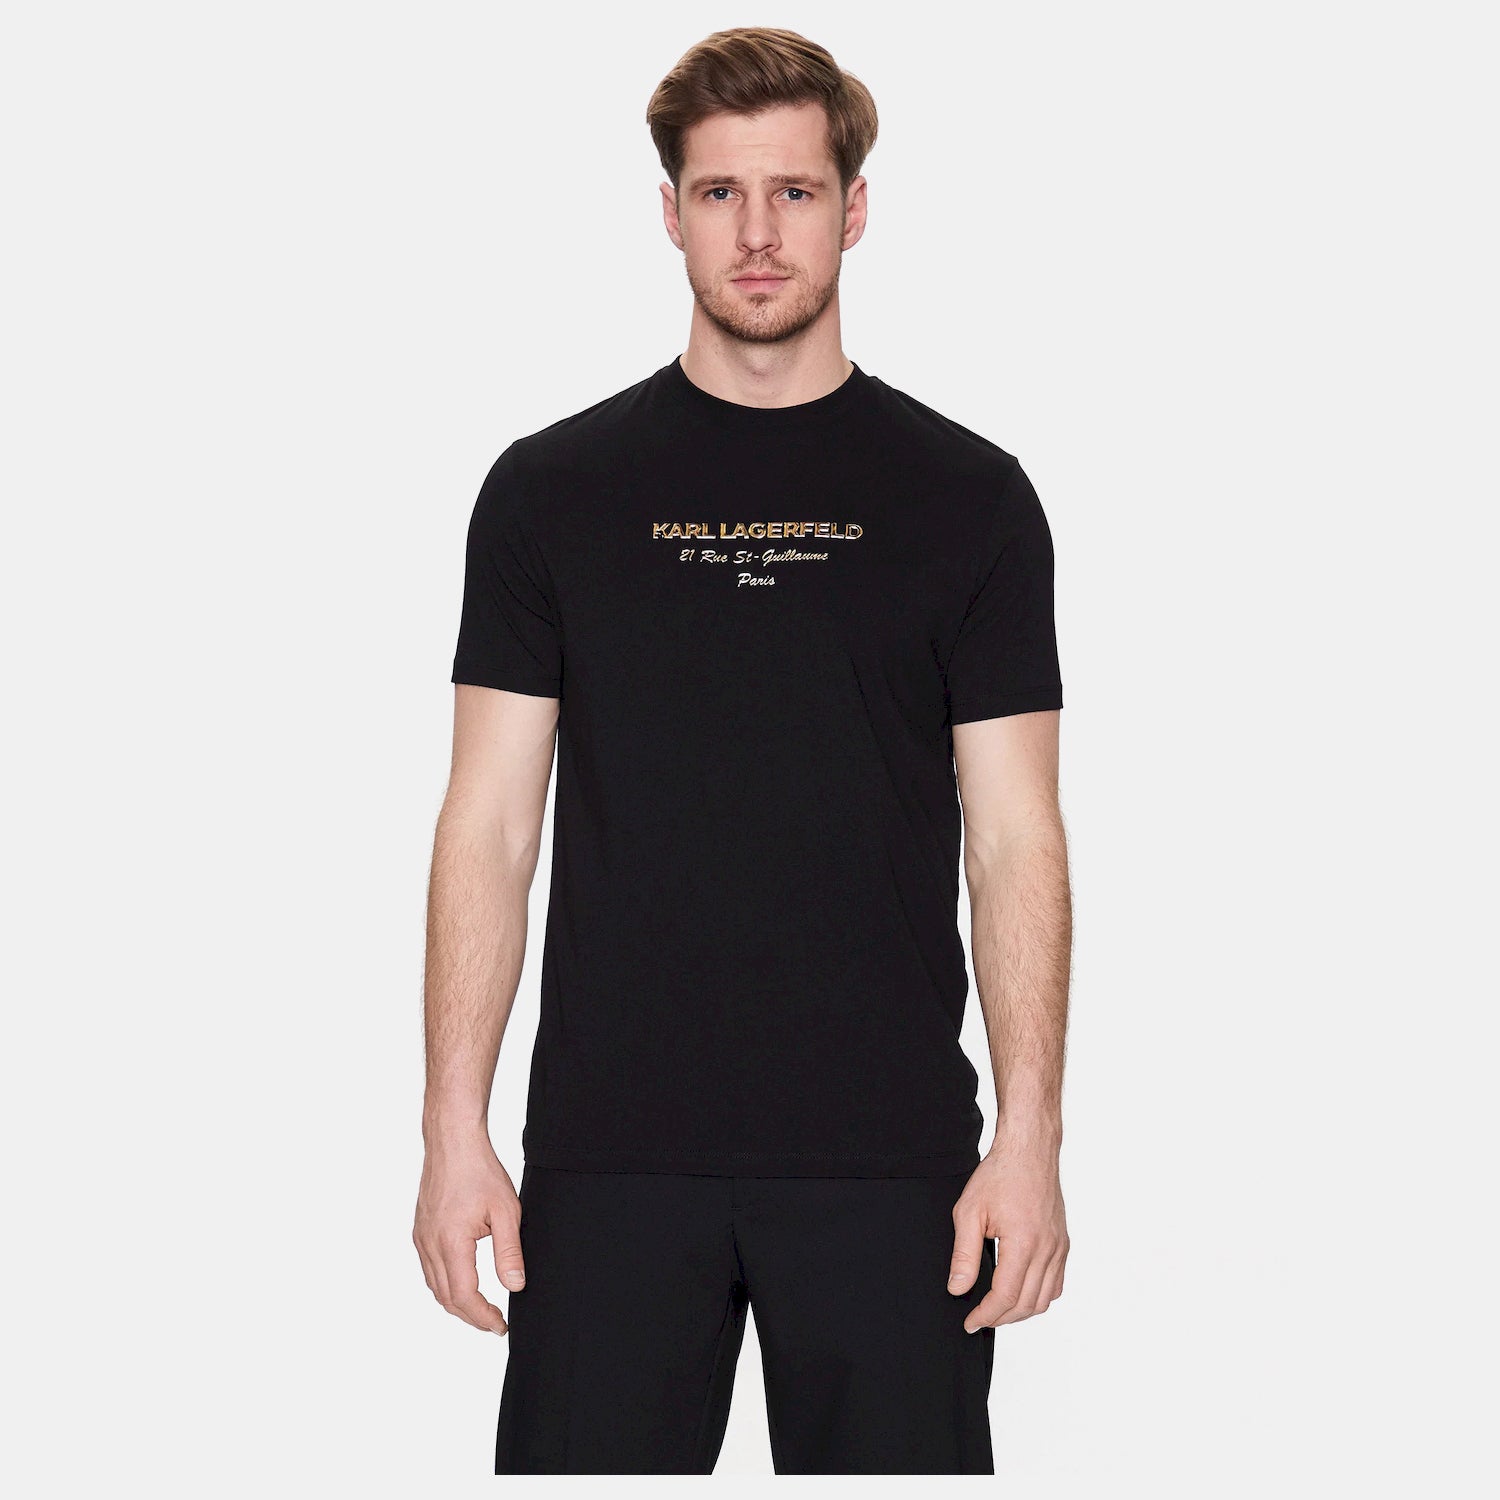 Karl Lagerfeld T Shirt Kl755035 Blk Gold Preto Ouro_shot5